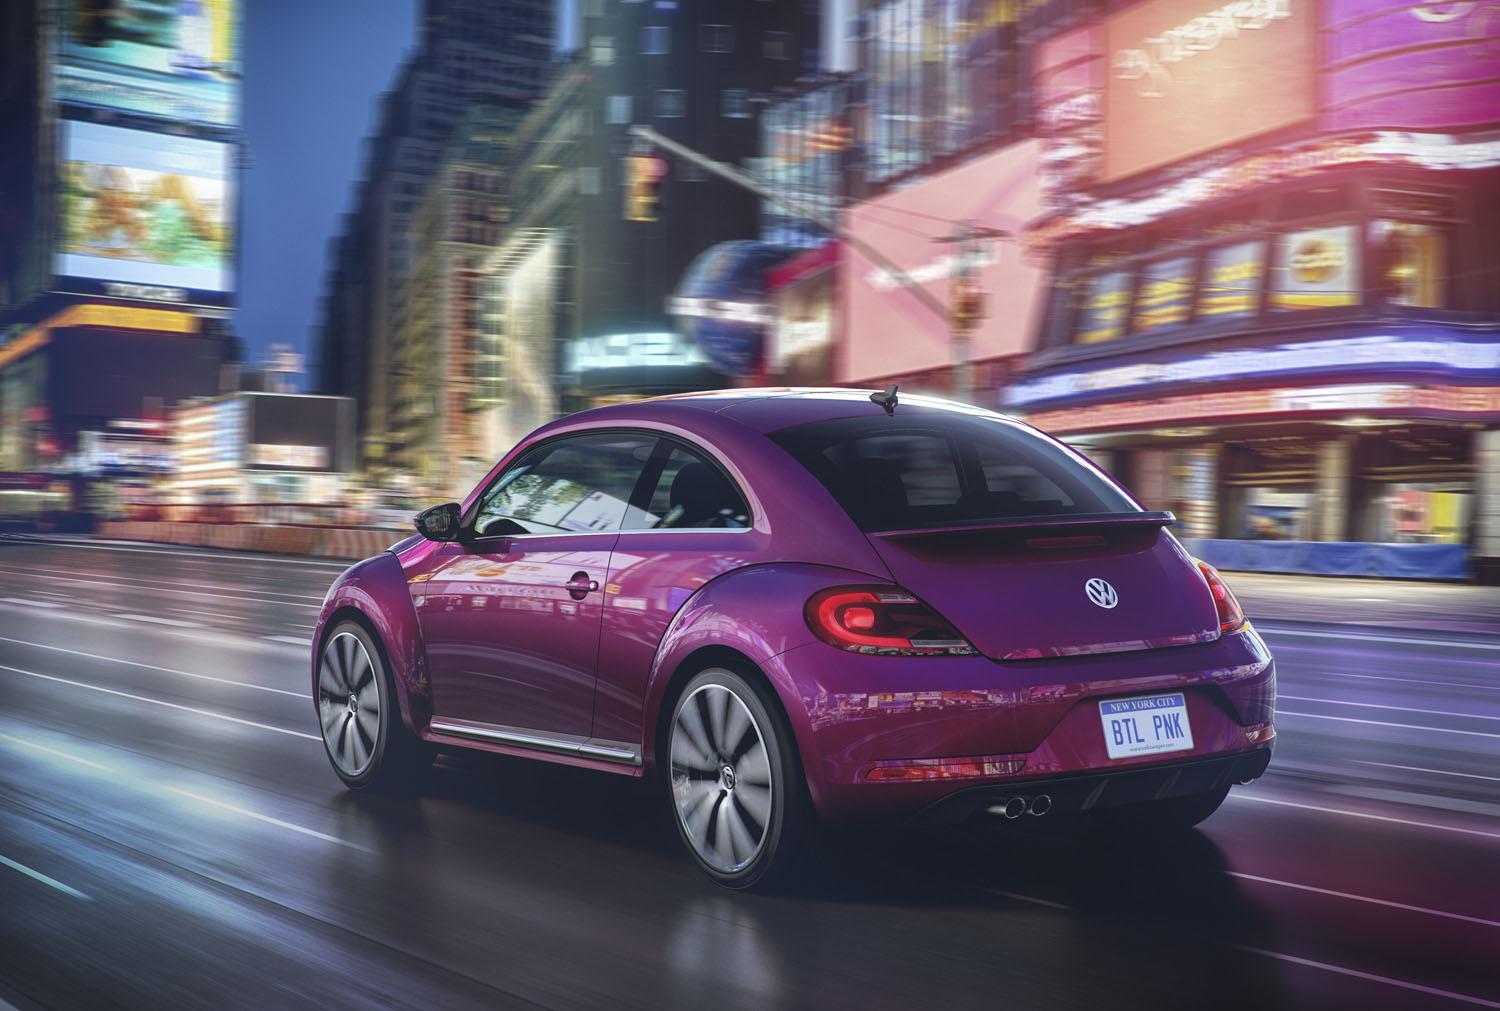 2015 Volkswagen Beetle Pink Color Edition